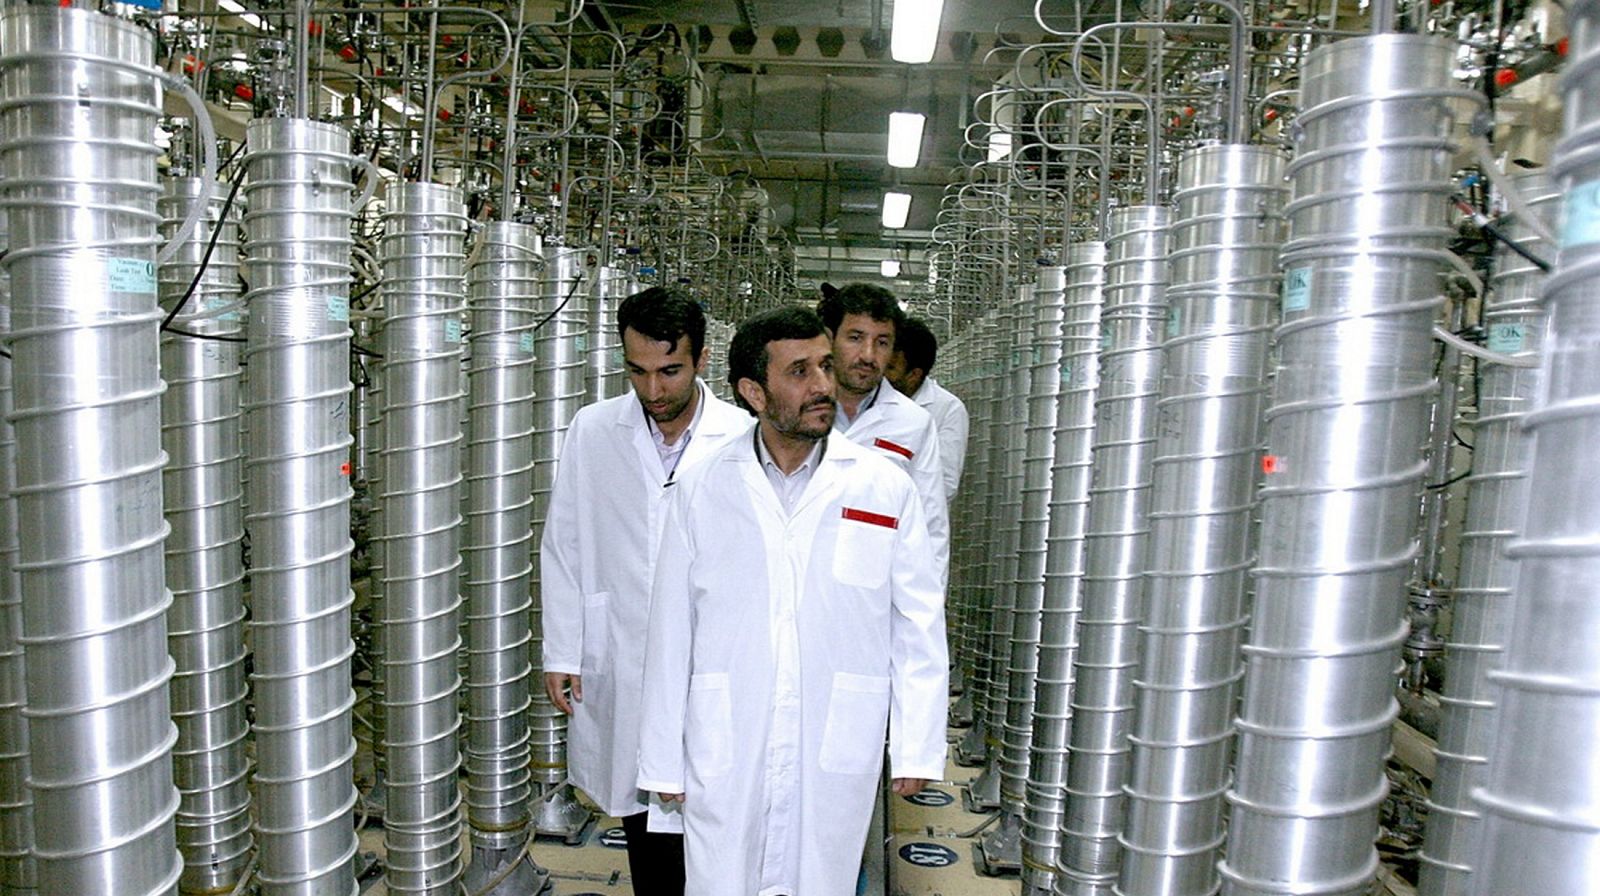 Iranian President Mahmoud Ahmadinejad visits the Natanz nuclear enrichment facility